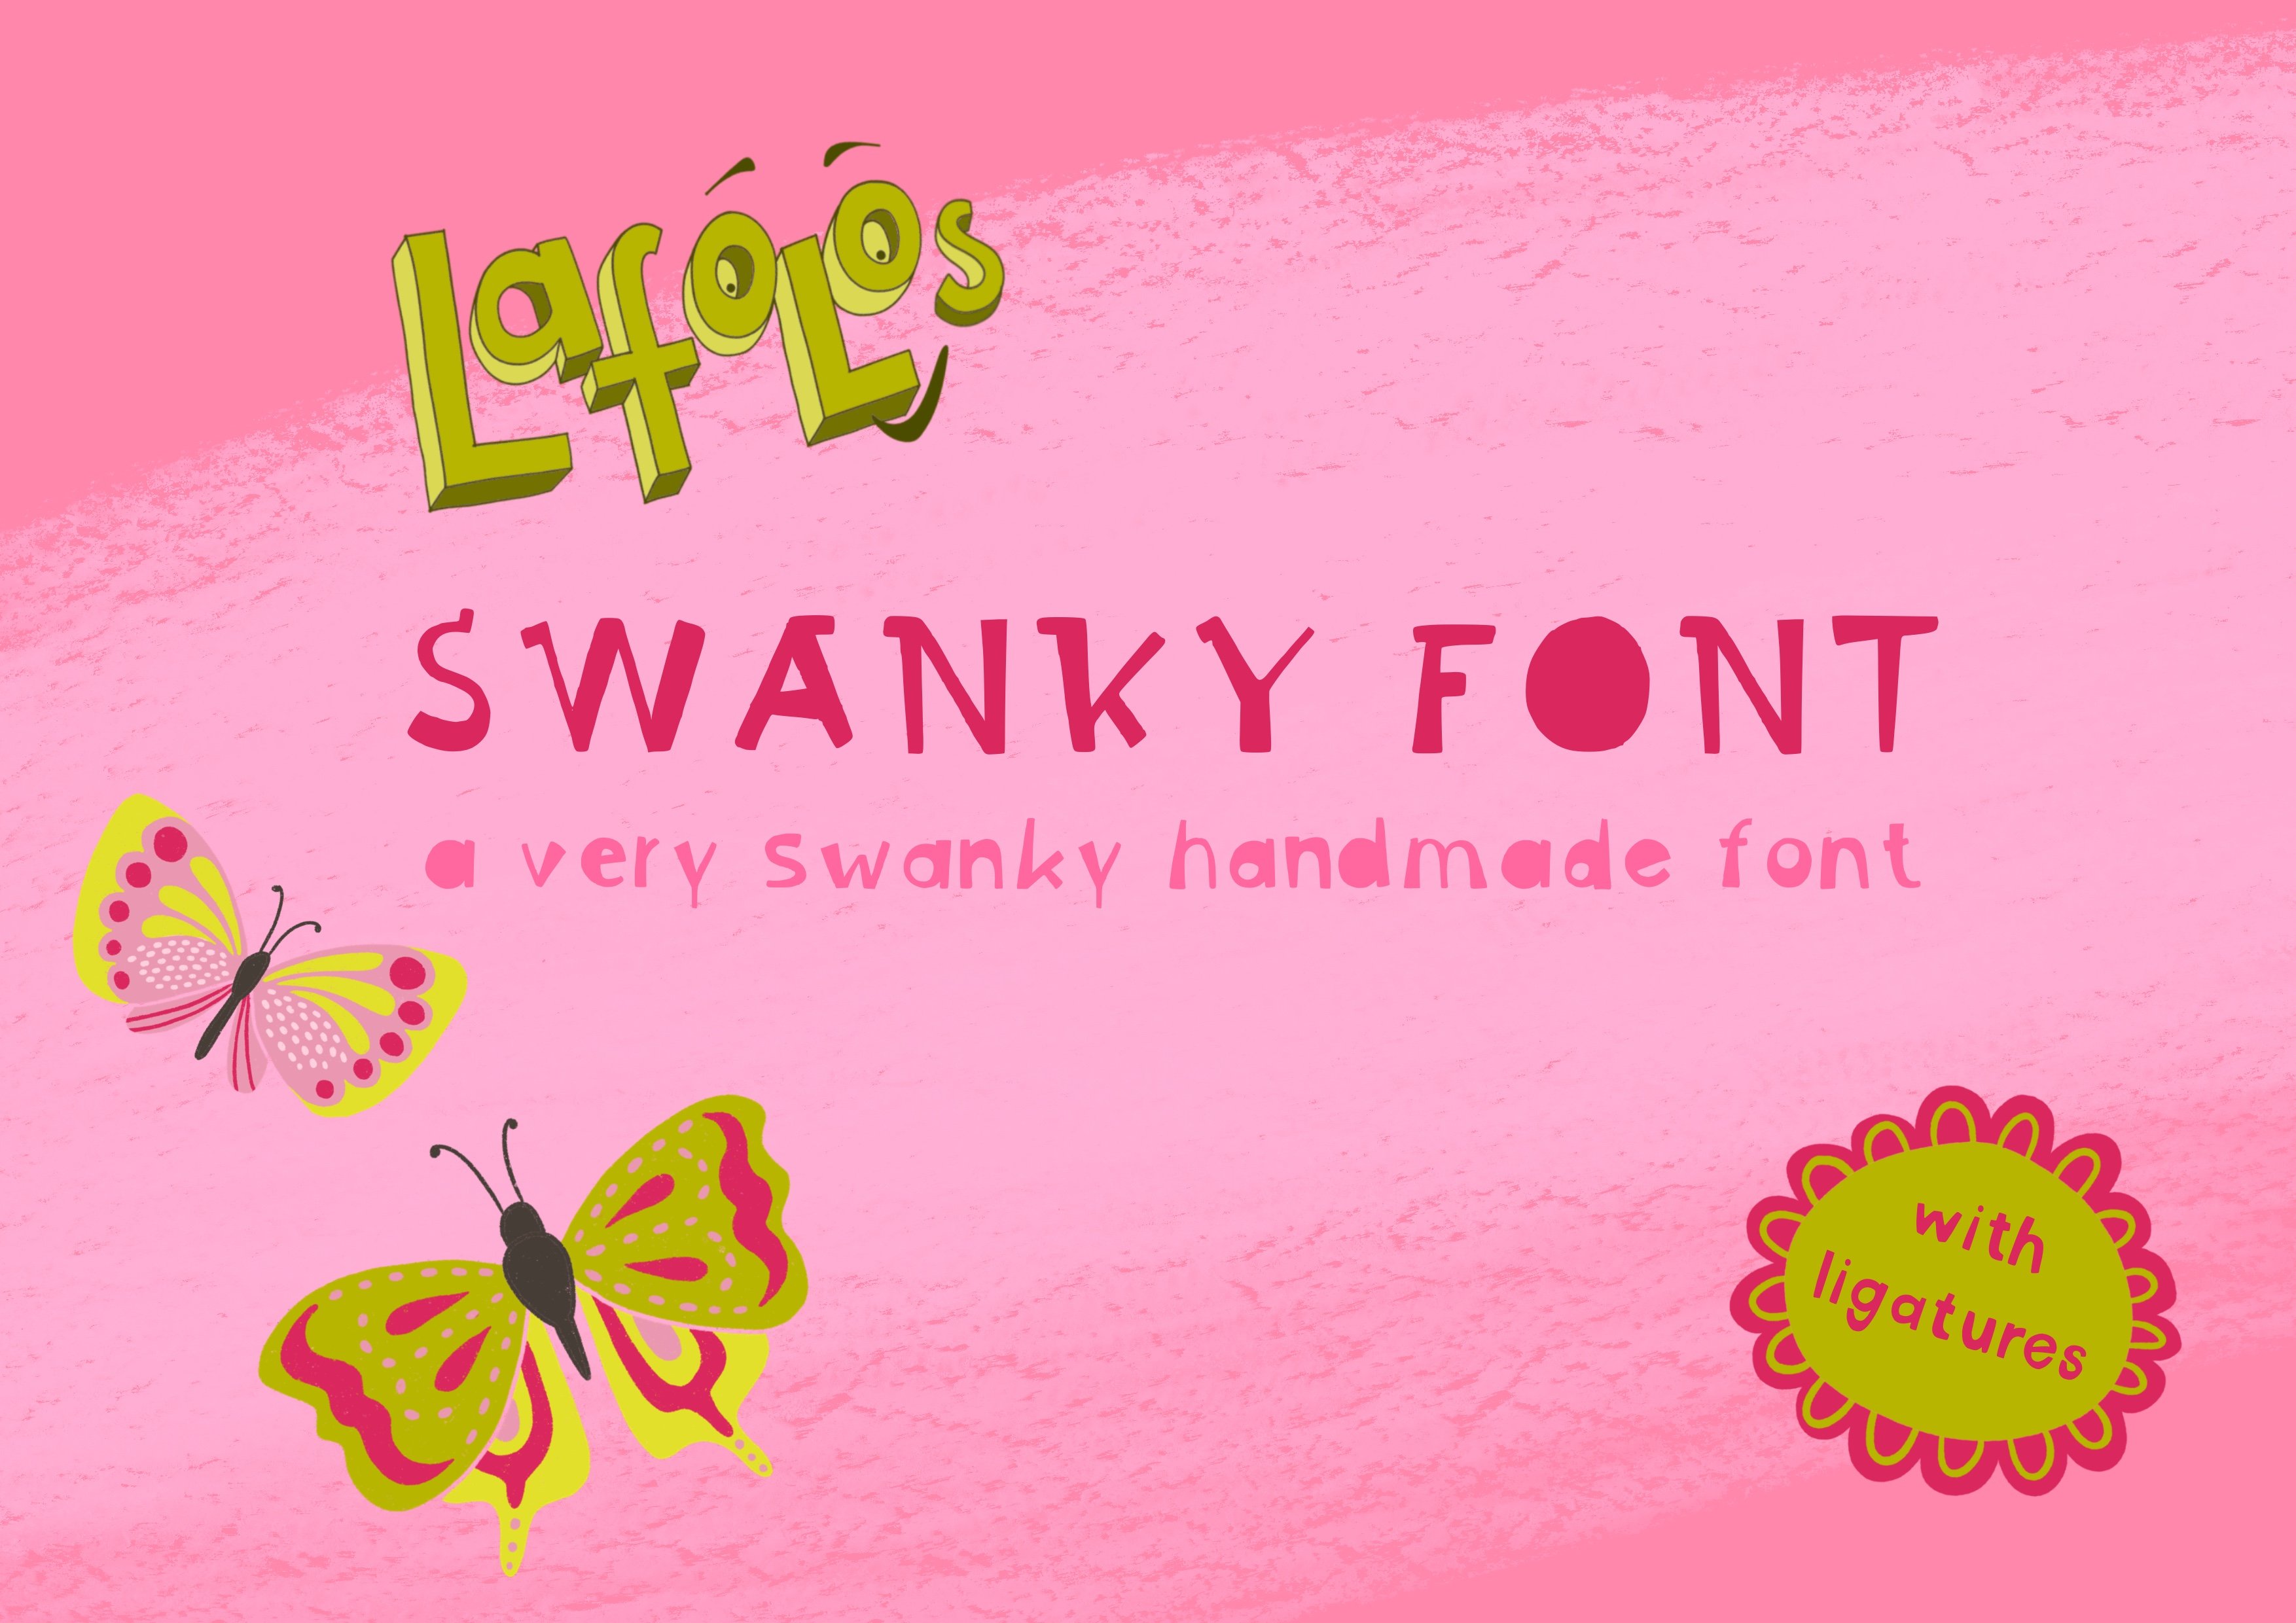 LAFOLOs Swanky Font cover image.